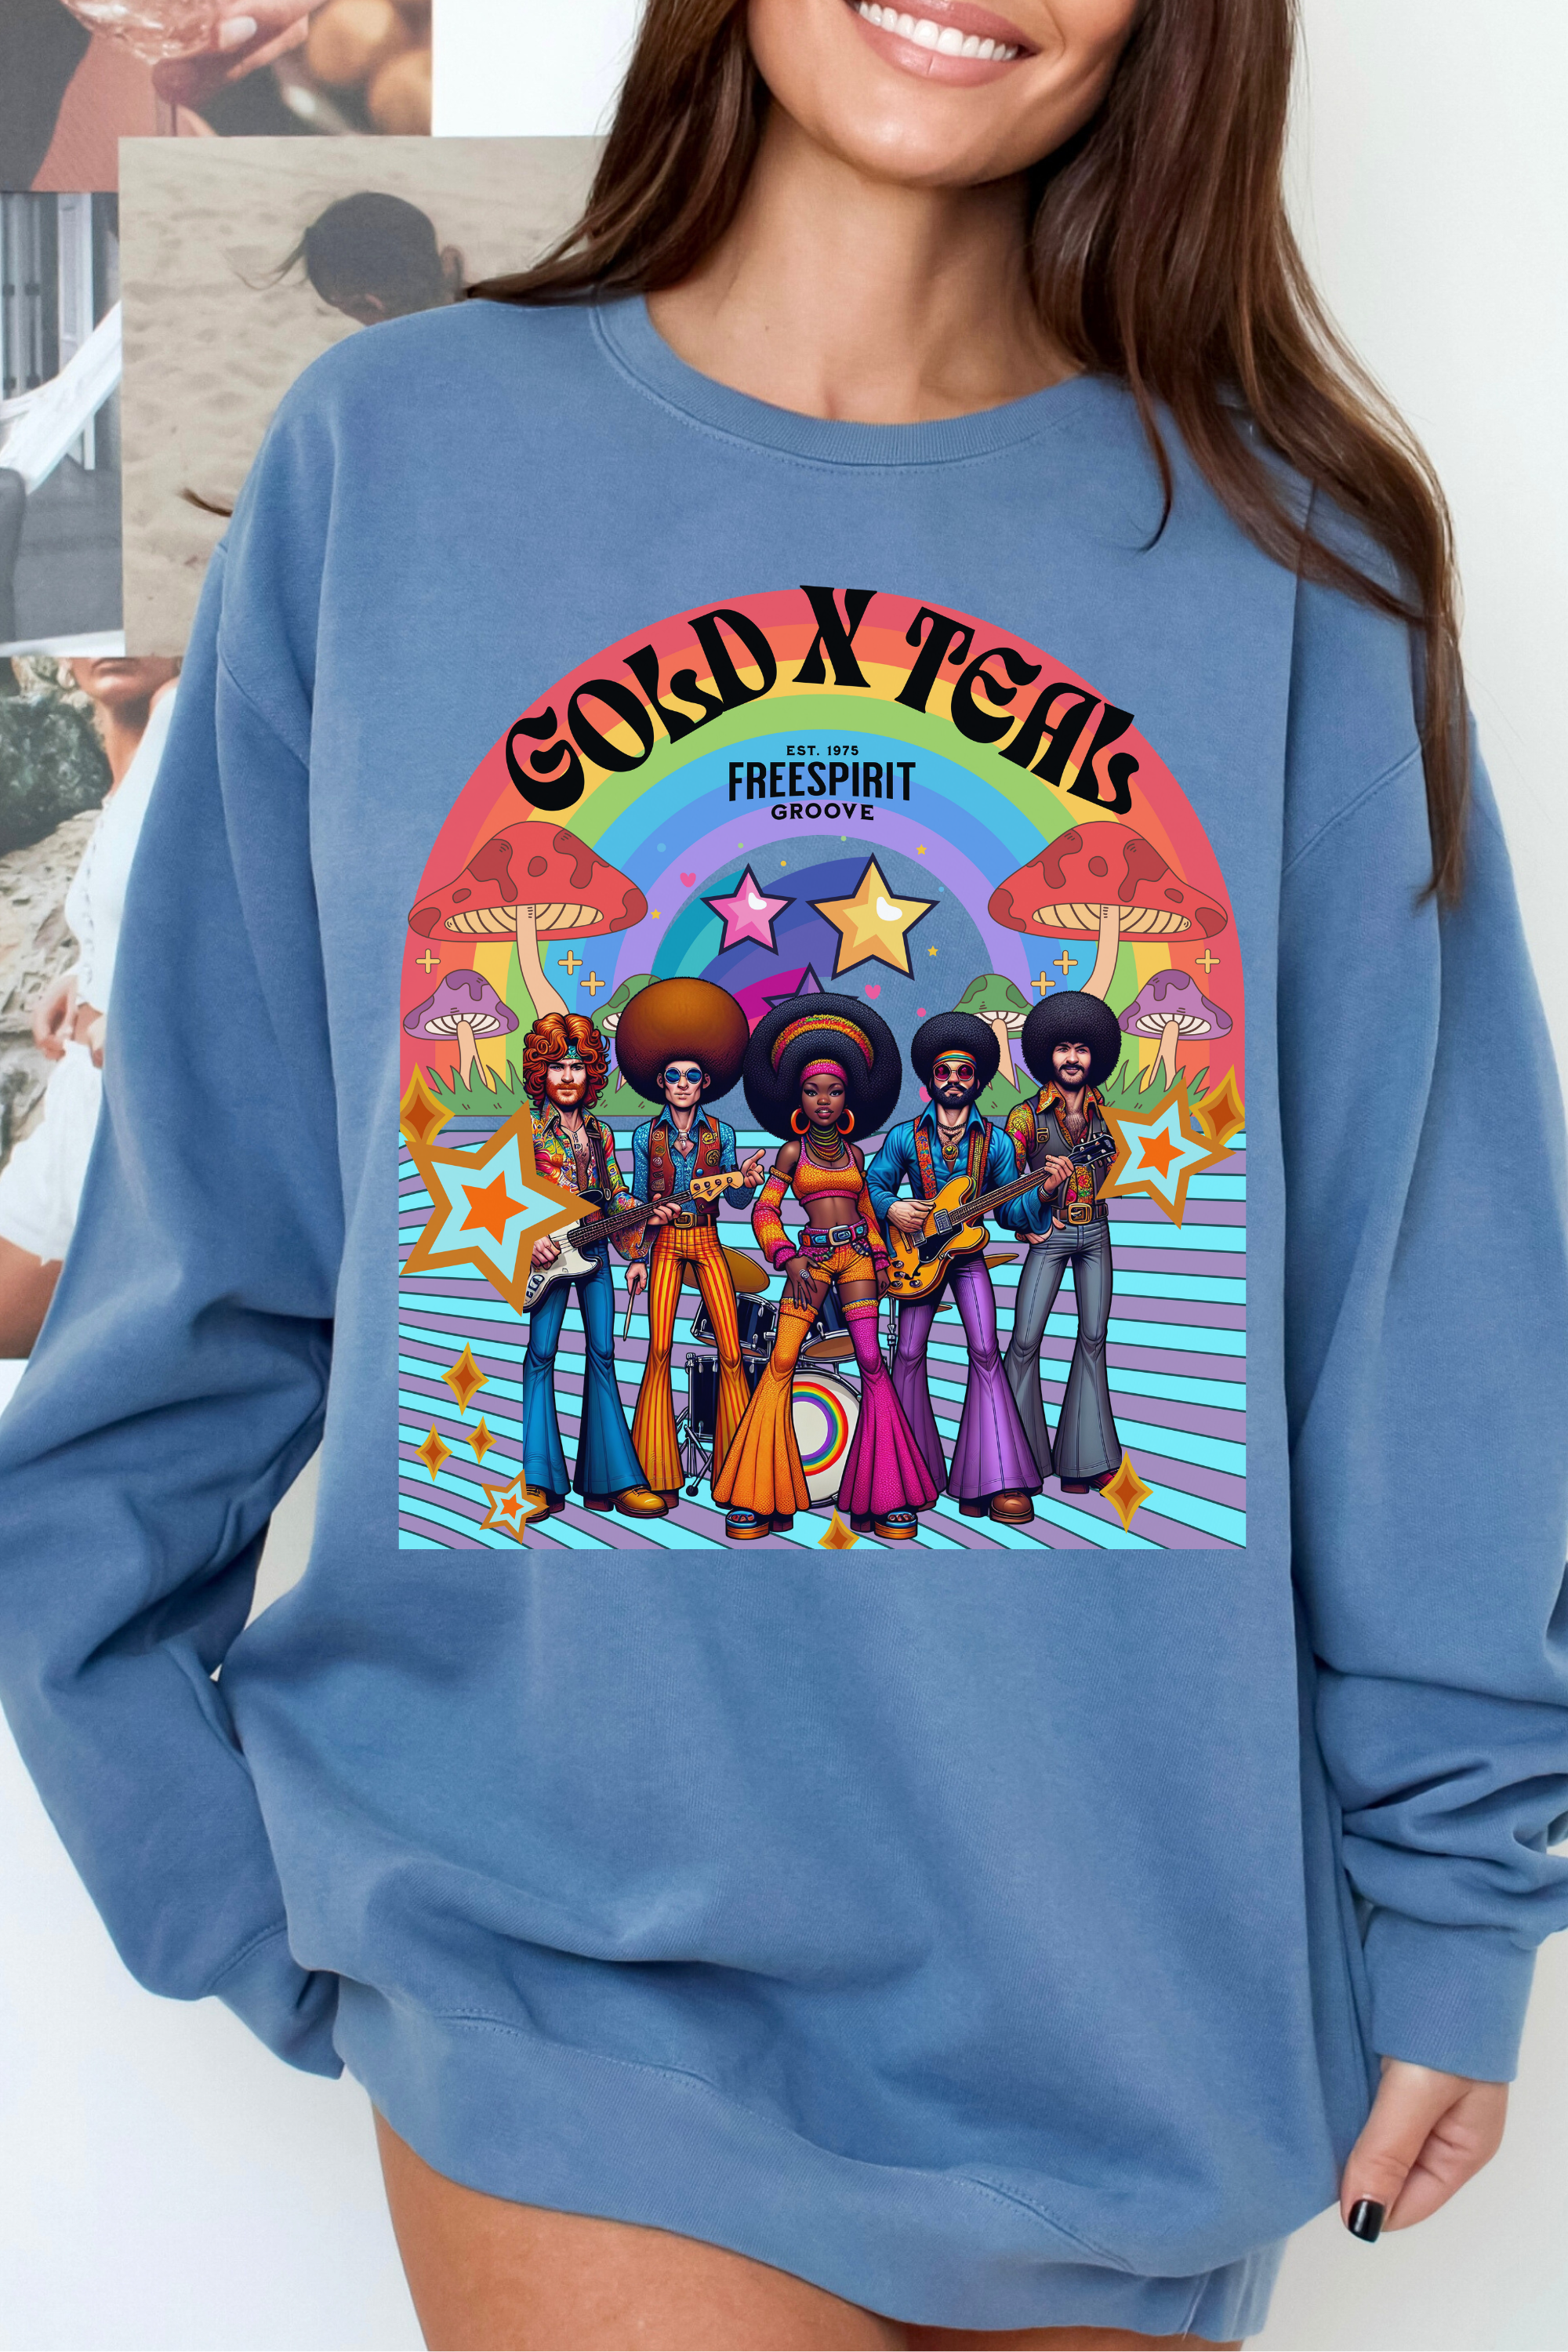 GOLDxTEAL colorful retro graphic sweatshirt.